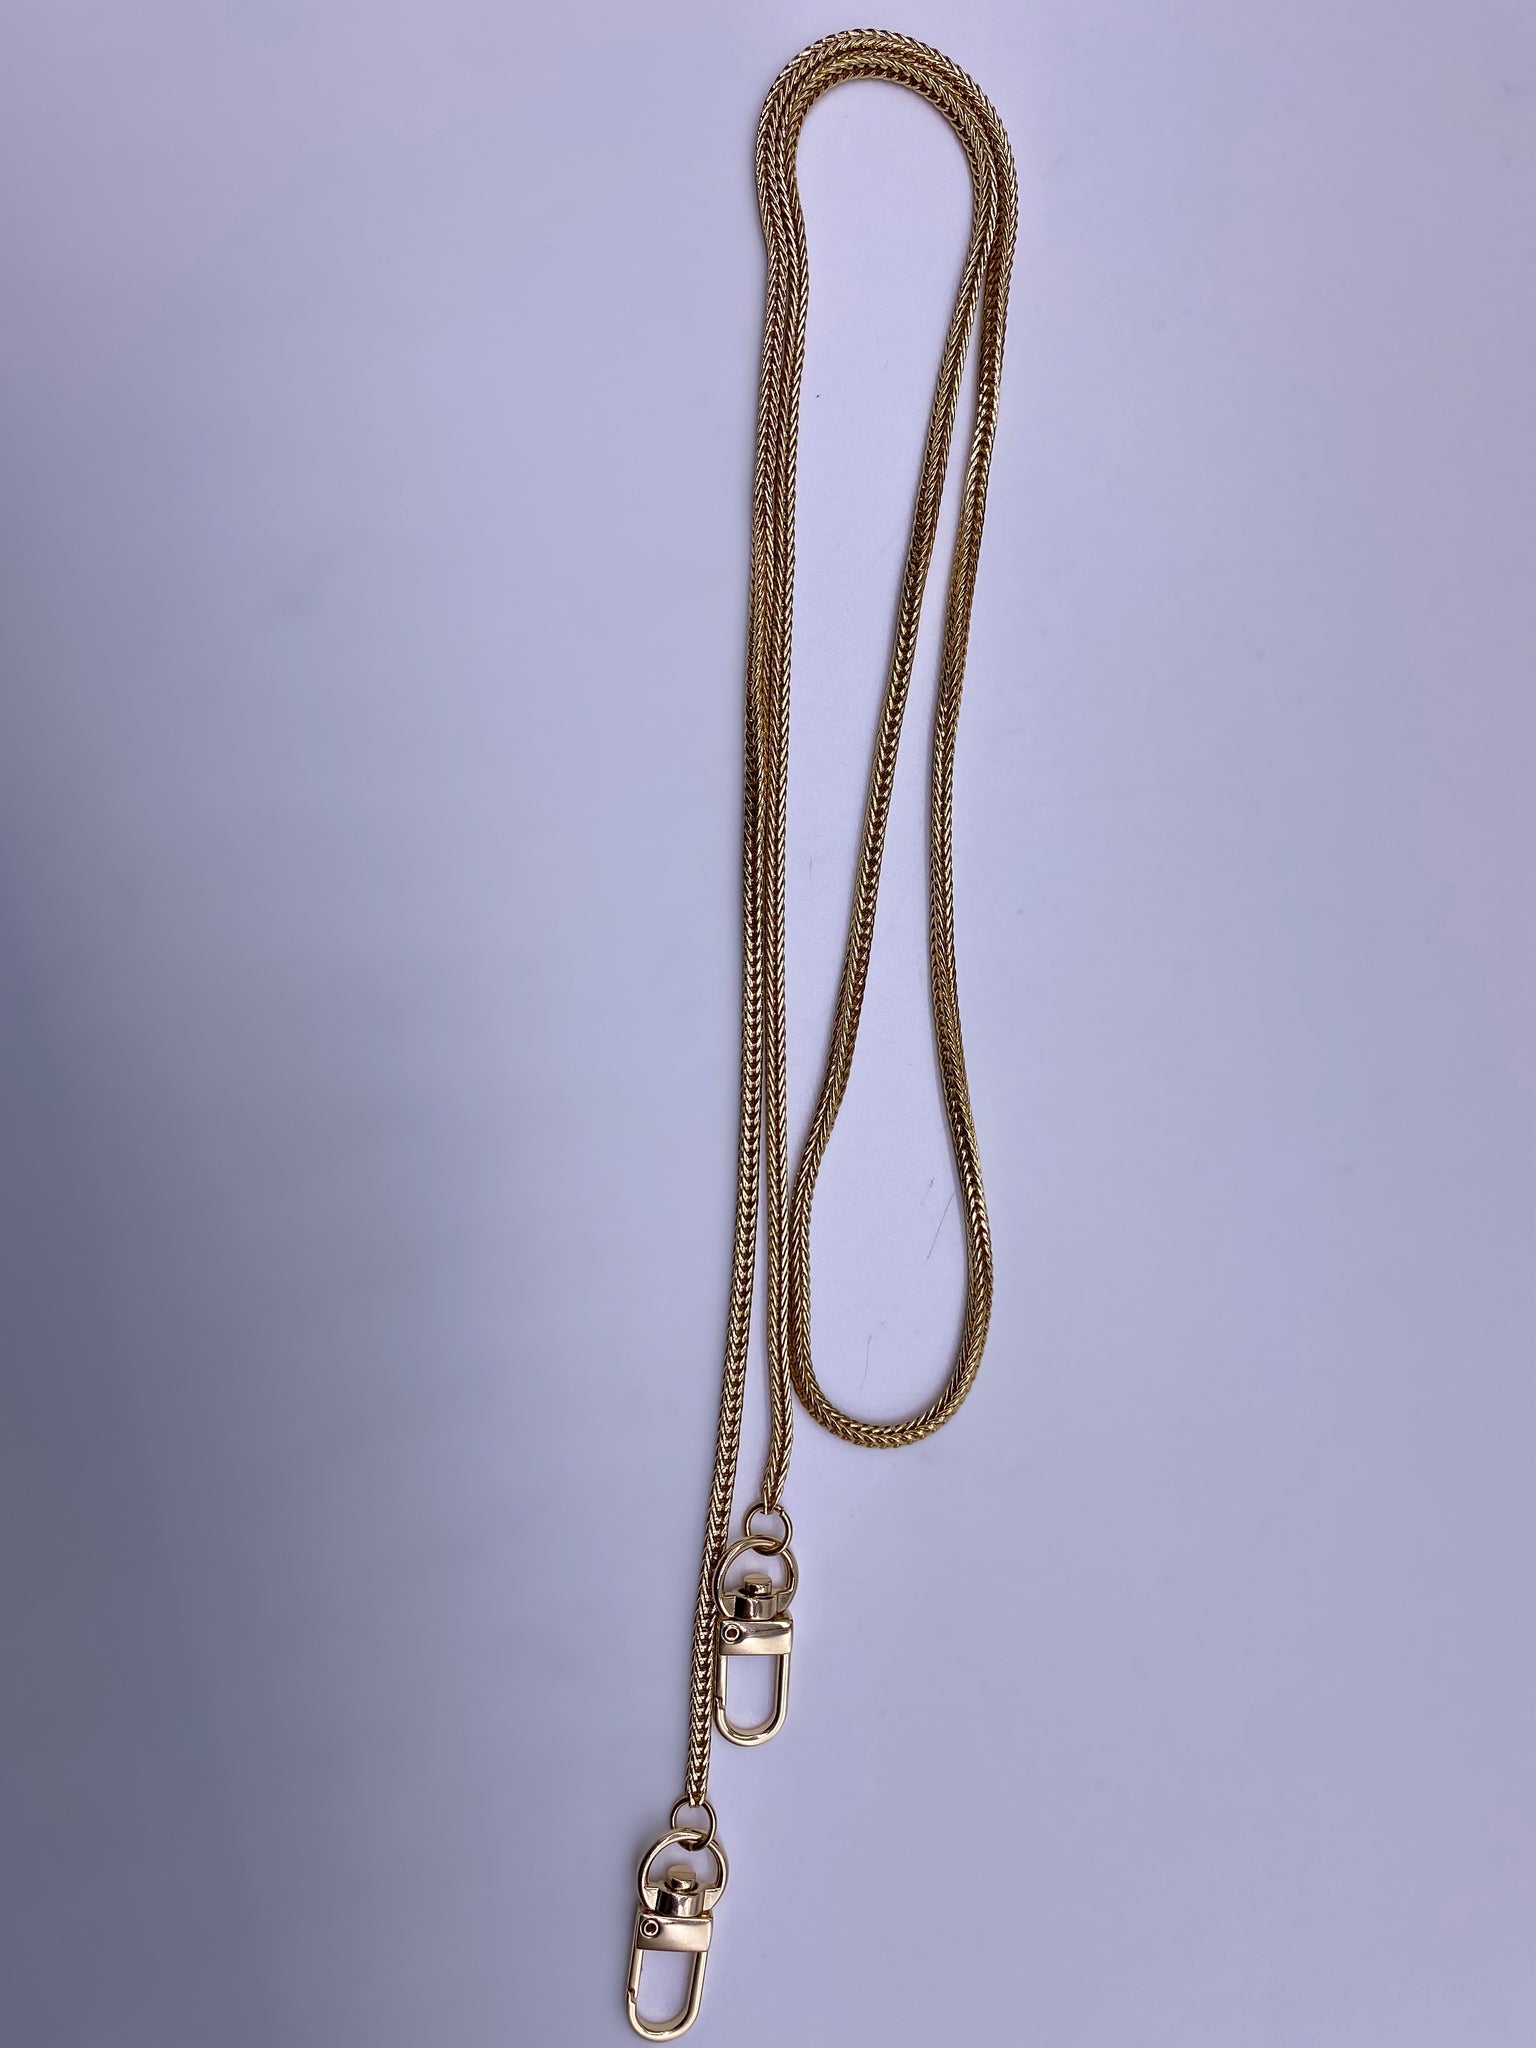 Handbag Chain Metal Skinny Snake Chain Bag Chain Strap Replacement for Handbag Crossbody Bag Shoulder Bag-Silver